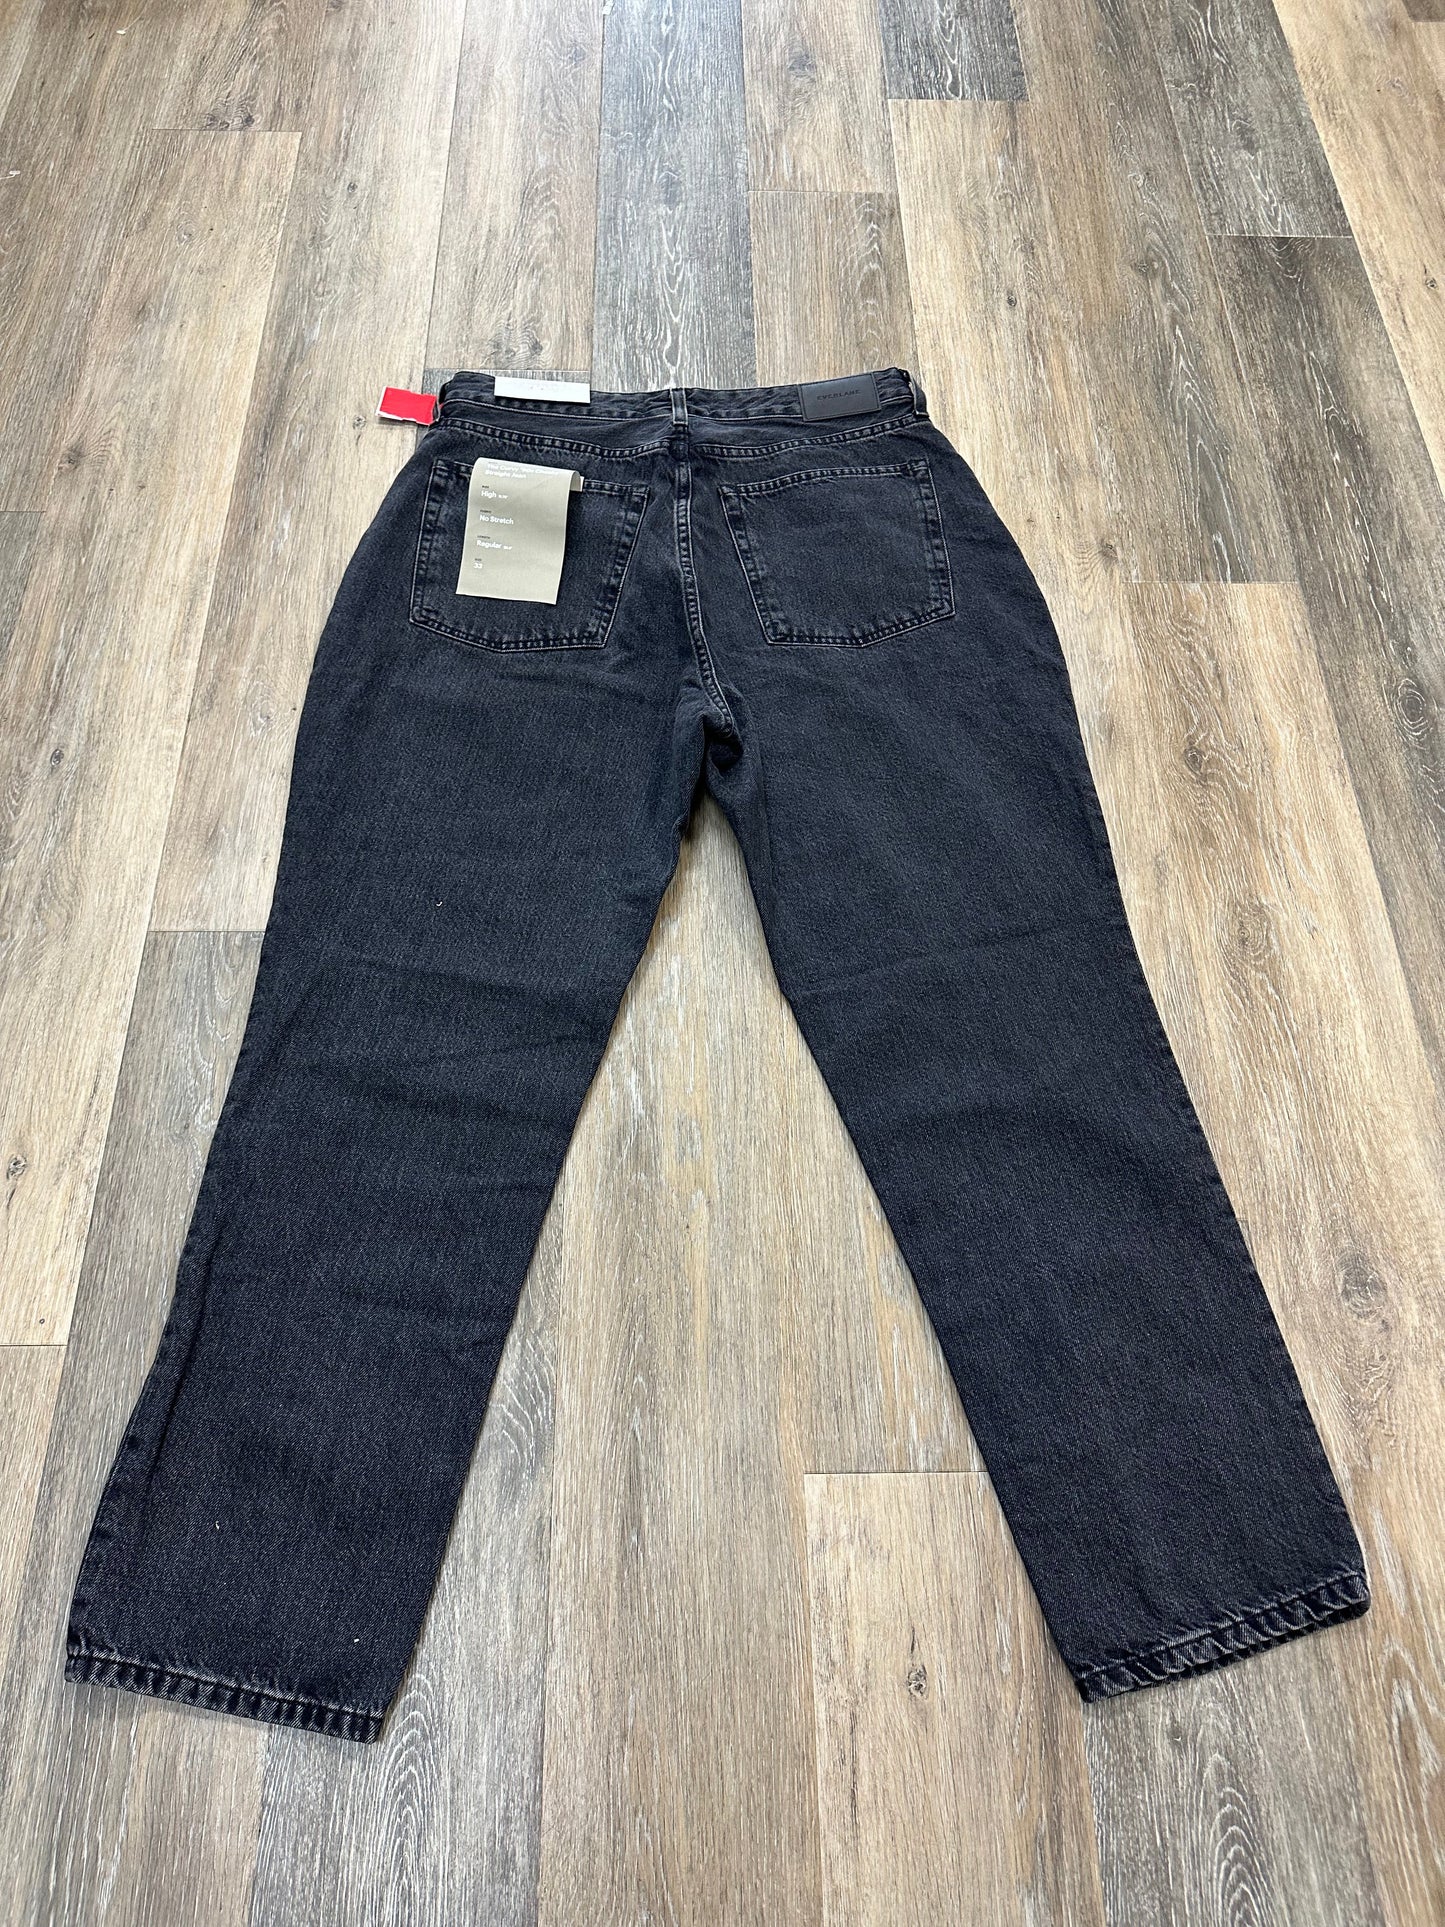 Black Denim Jeans Boot Cut Everlane, Size 16